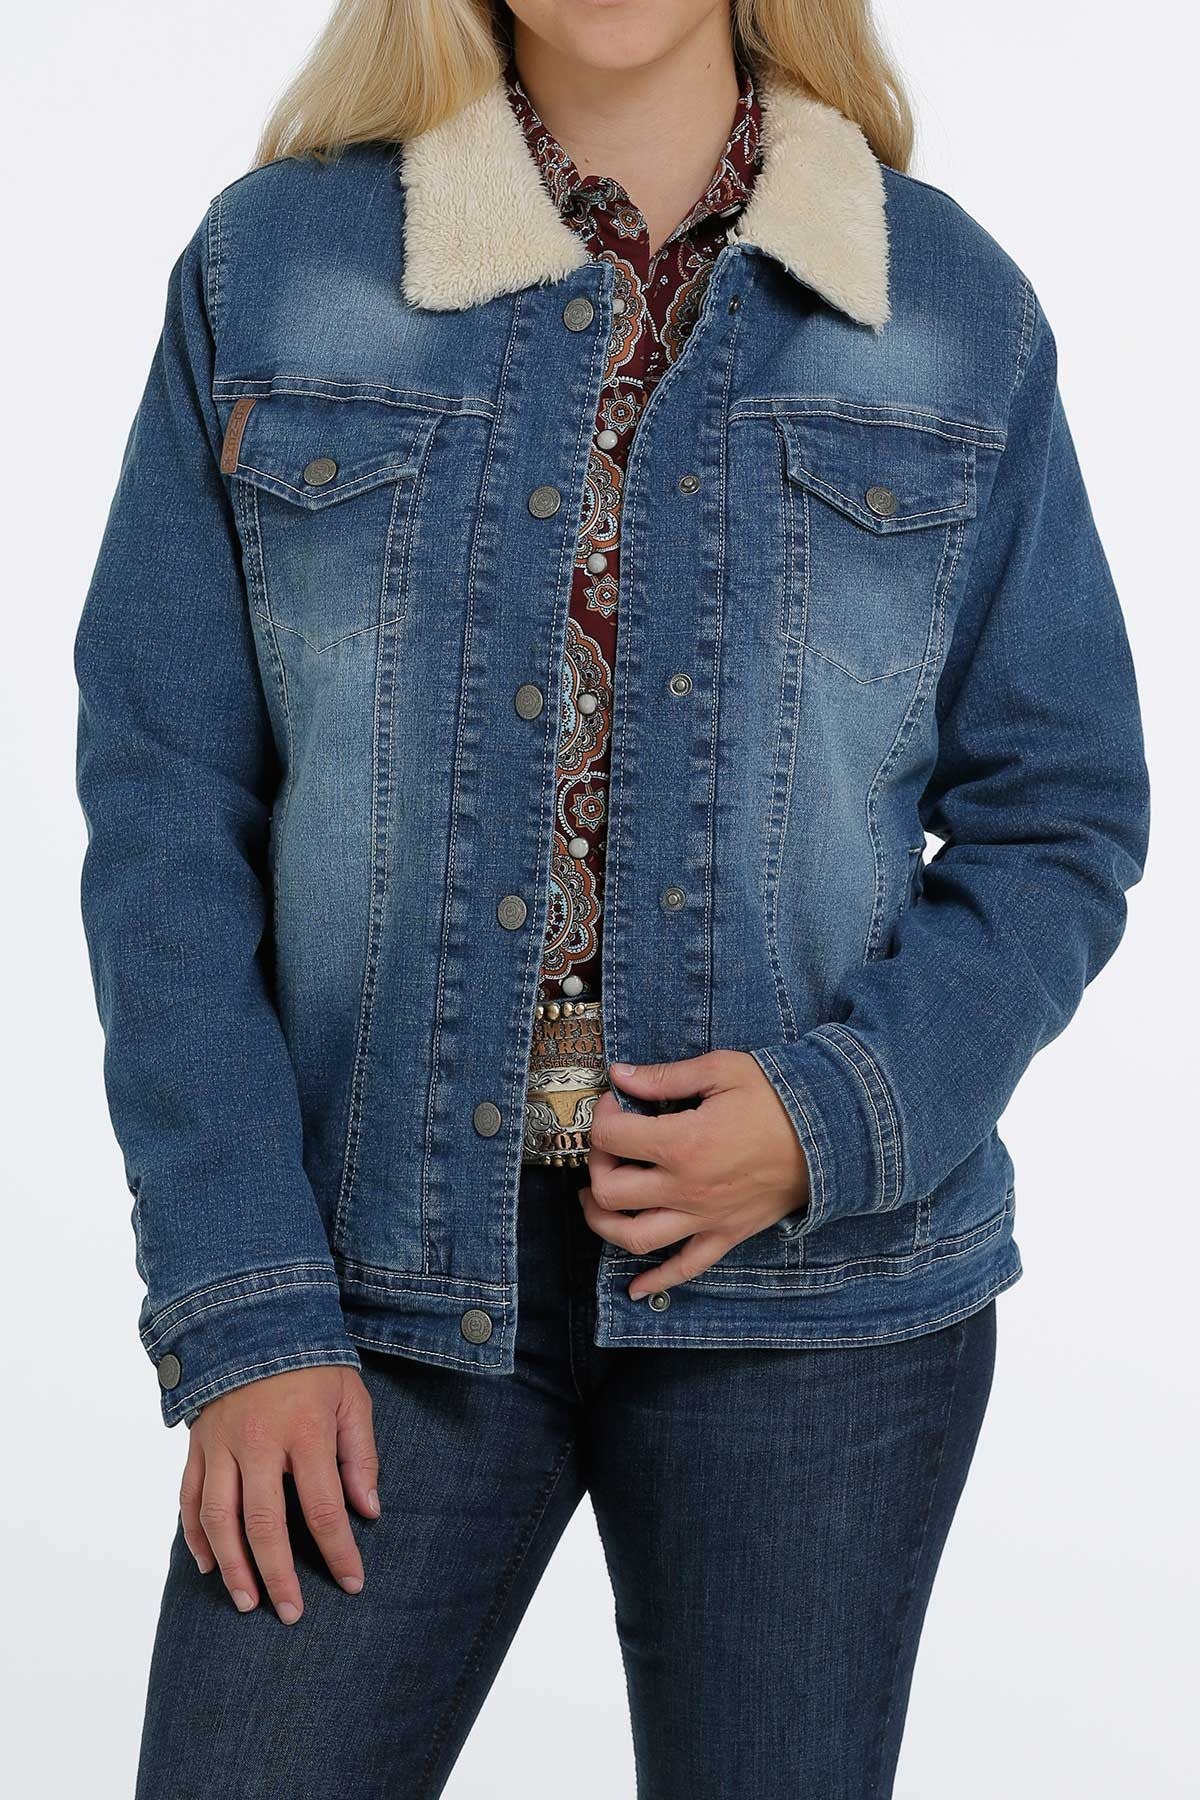 Wax Jeans Women's Denim Jacket - 90214 - Oly's Home Fashion